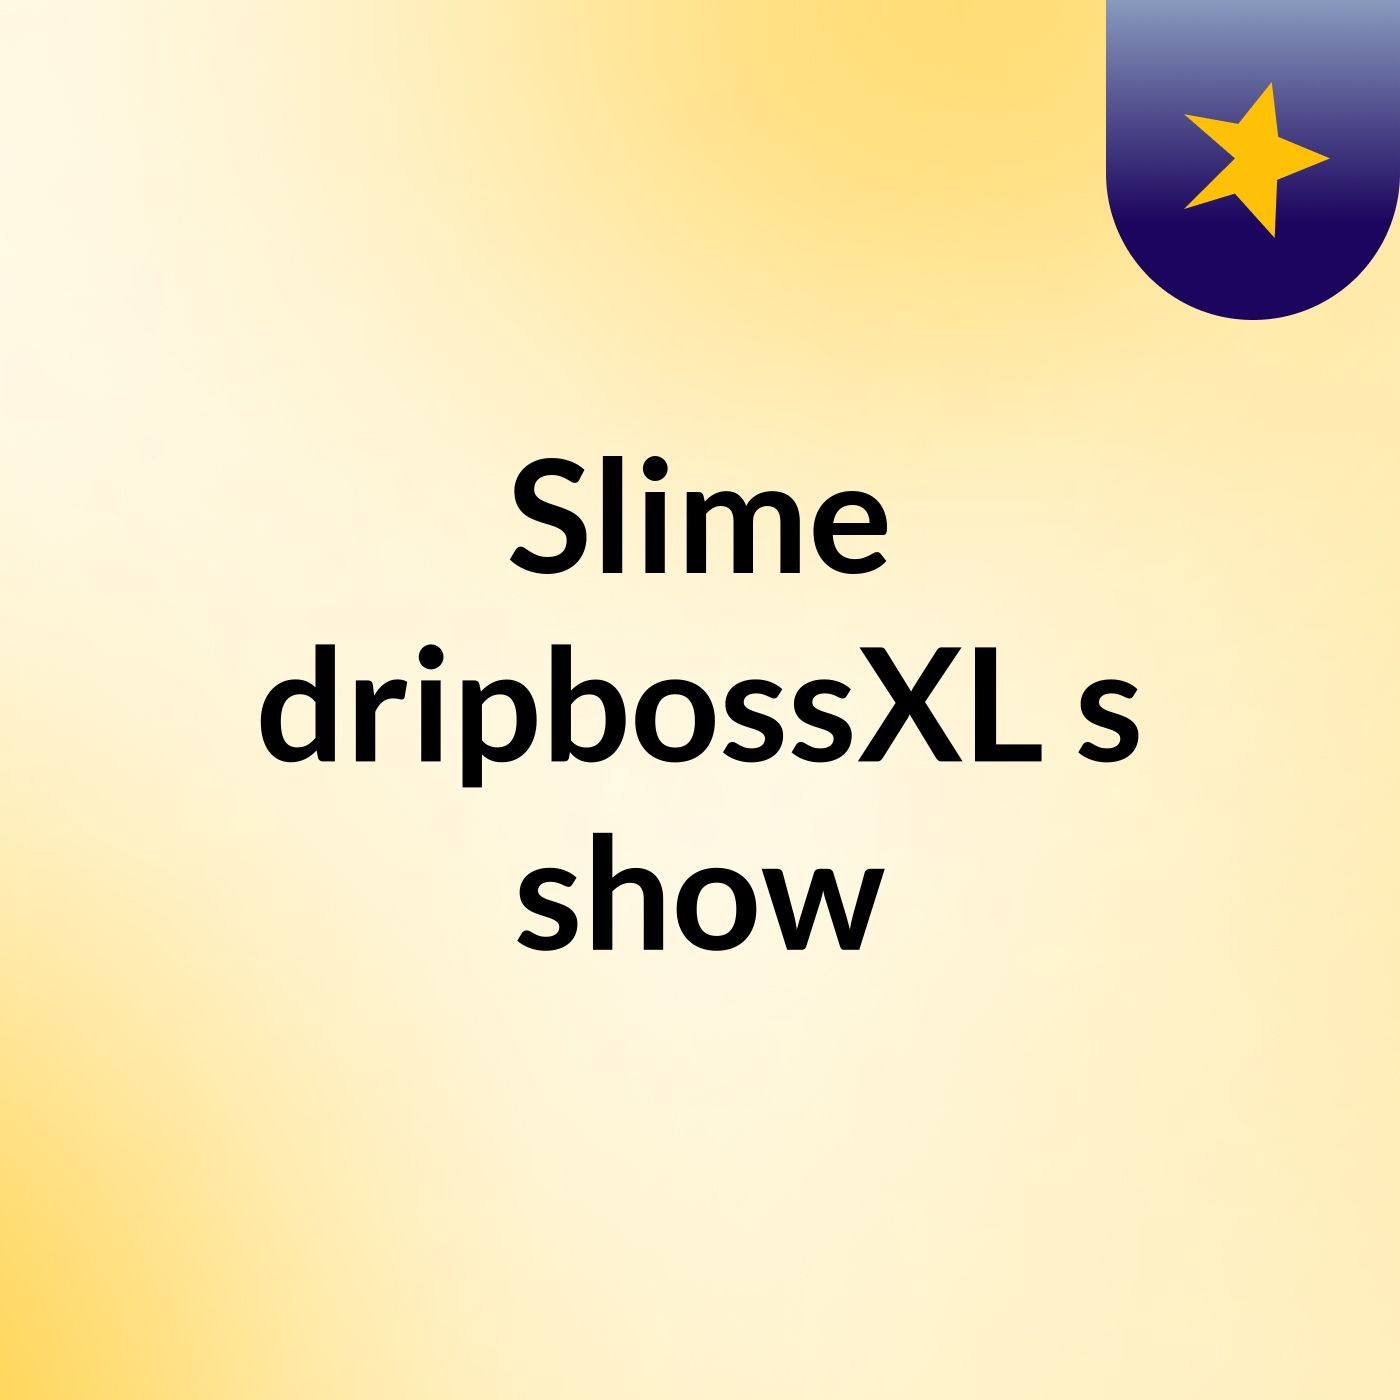 Episode 3 - Slime dripbossXL's show